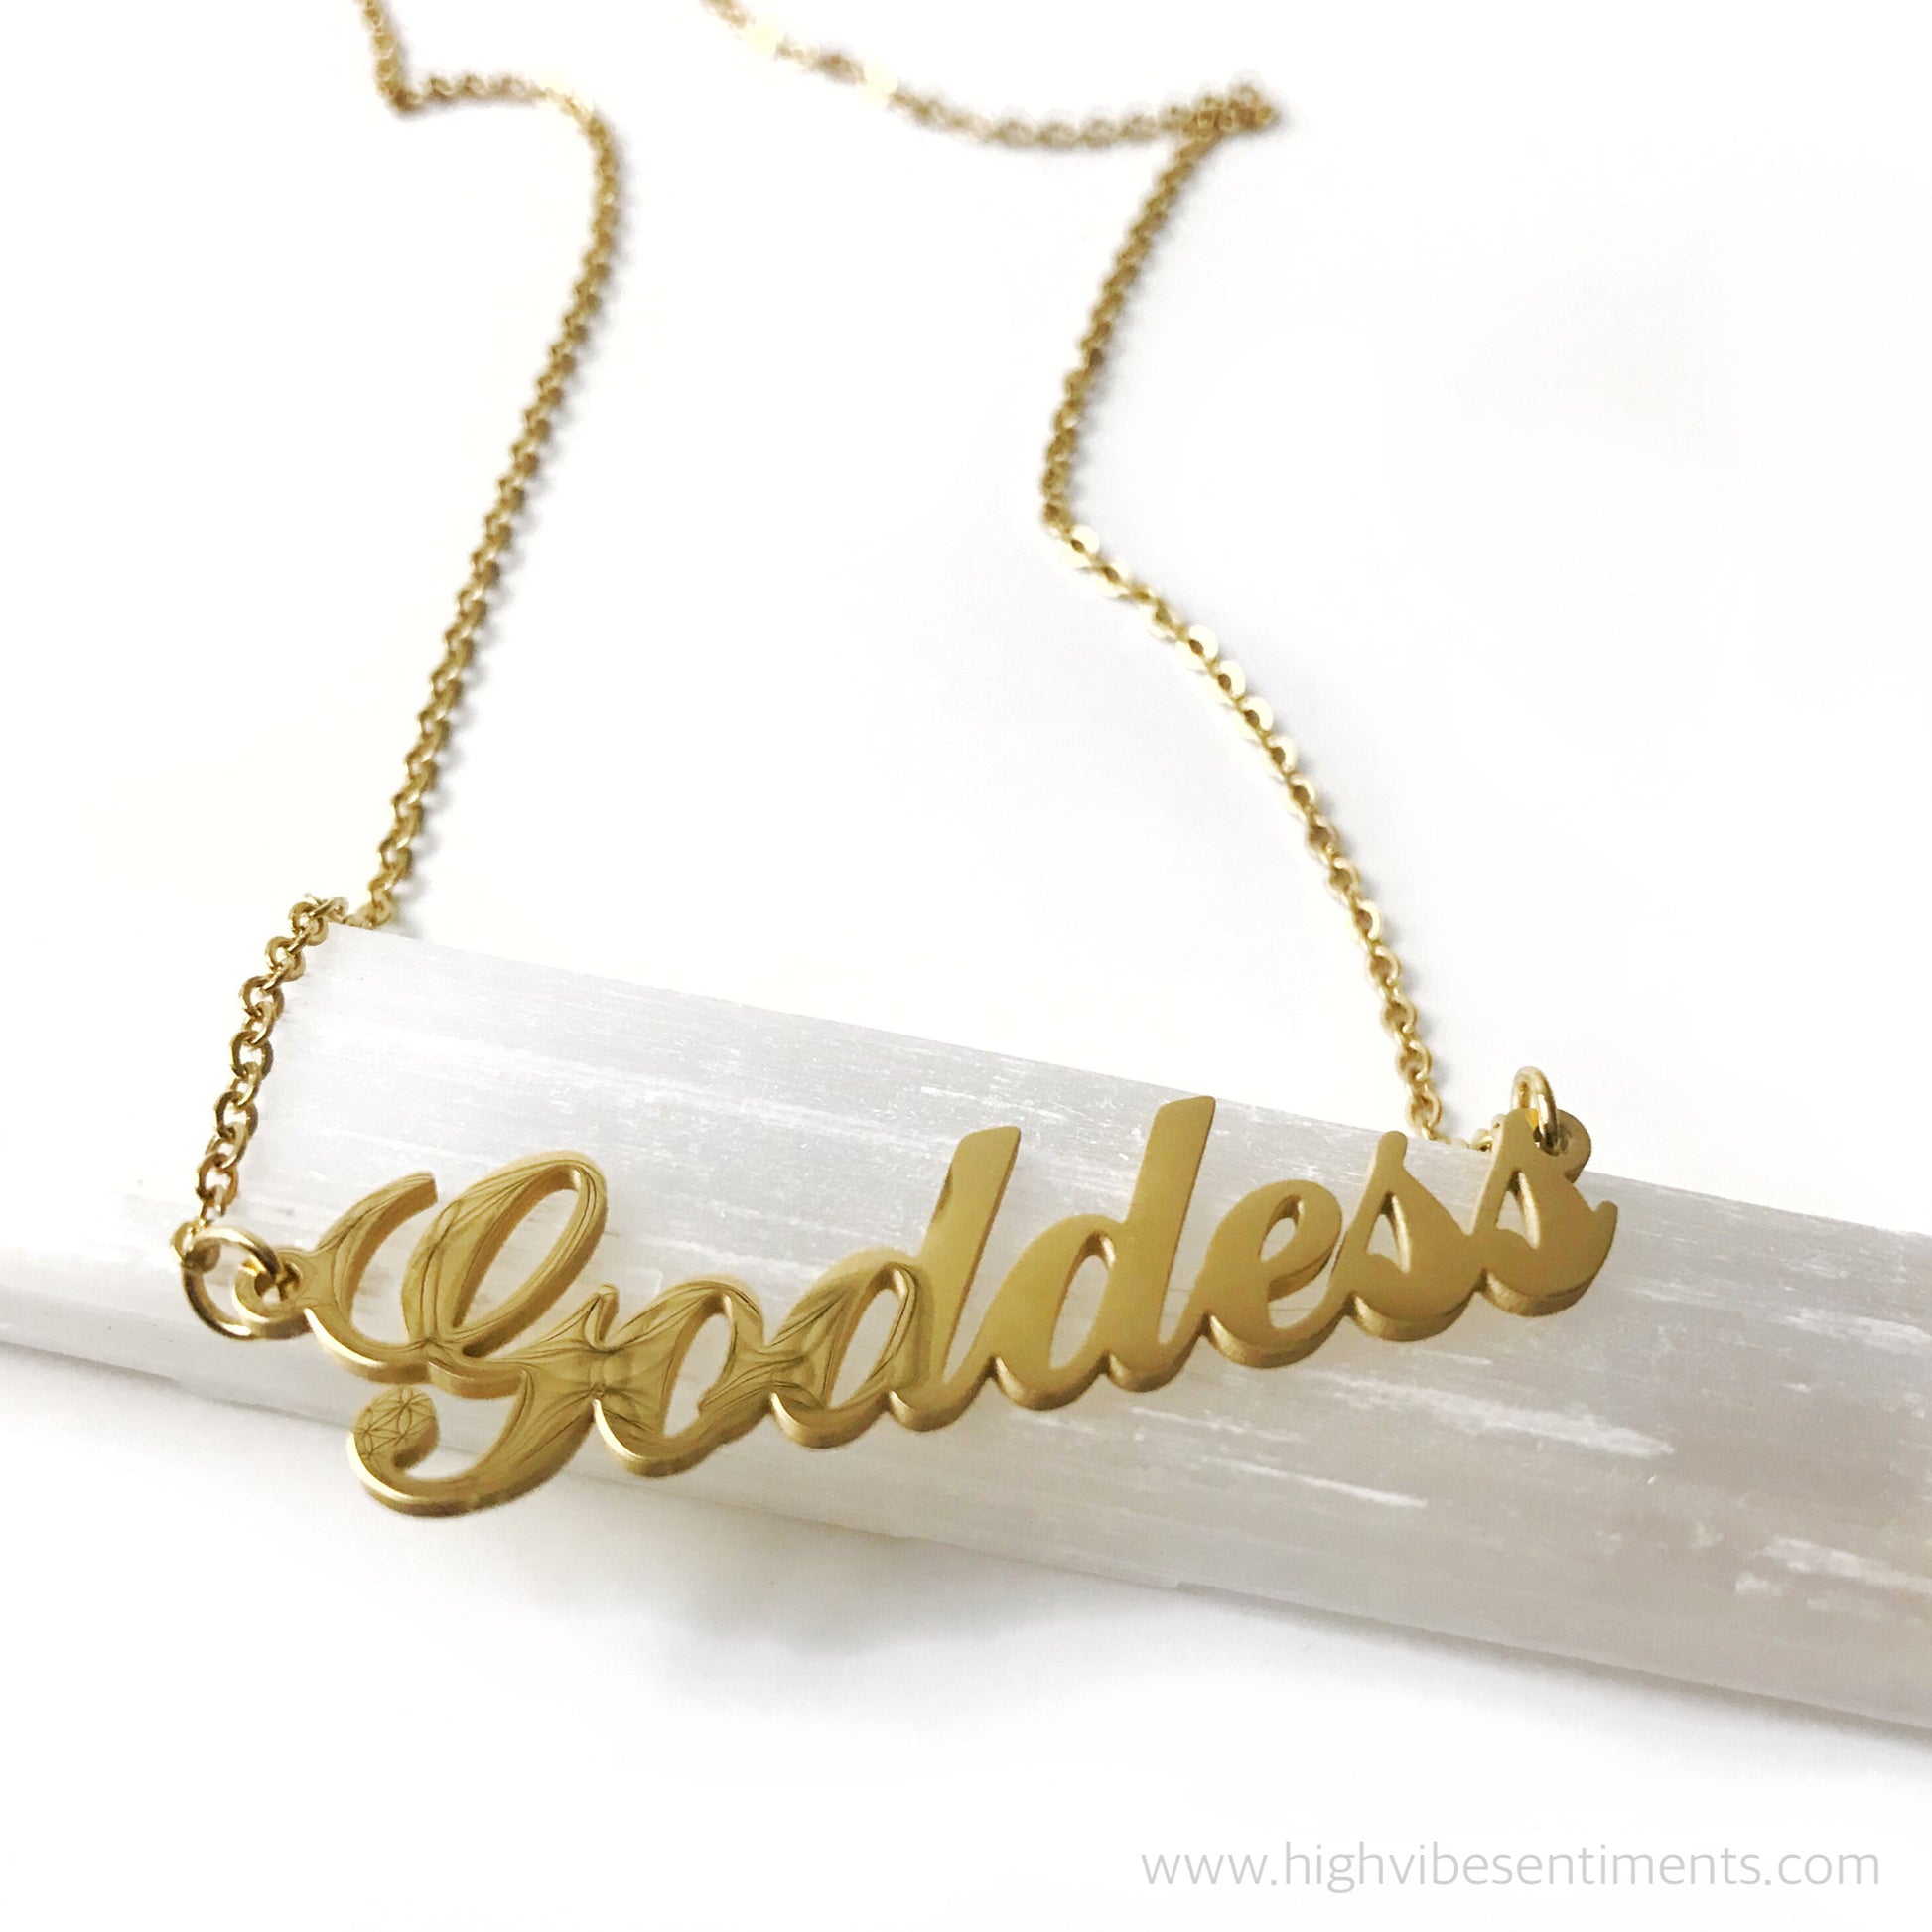 High Vibe Sentiments Goddess Nameplate Necklace